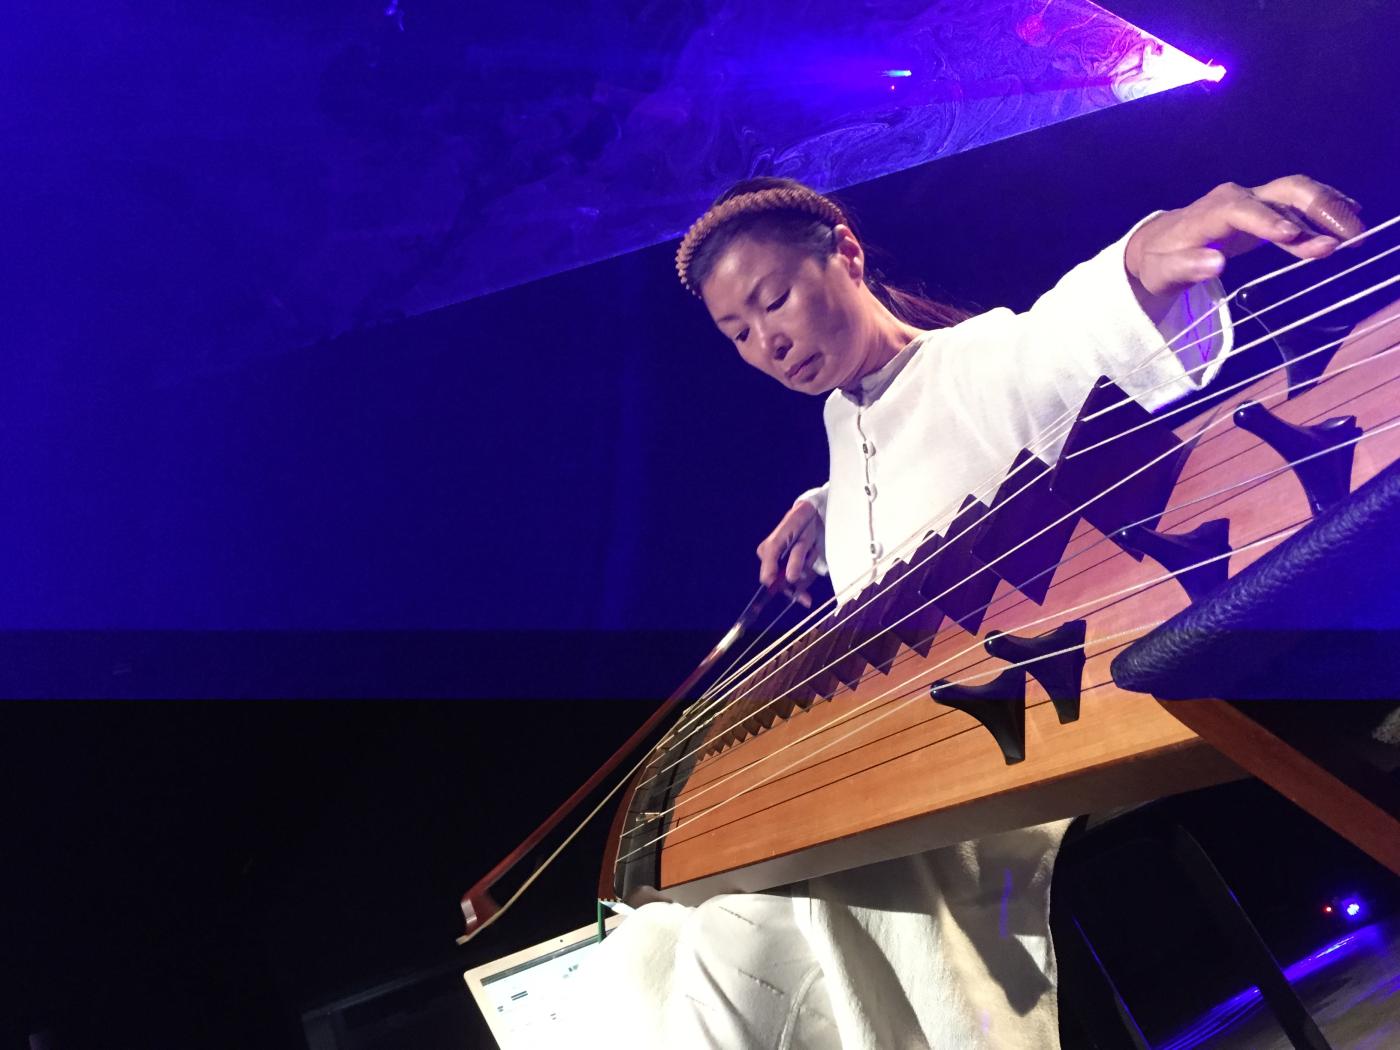 Jin Hi Kim plays the electric komungo, a long stringed instrument.